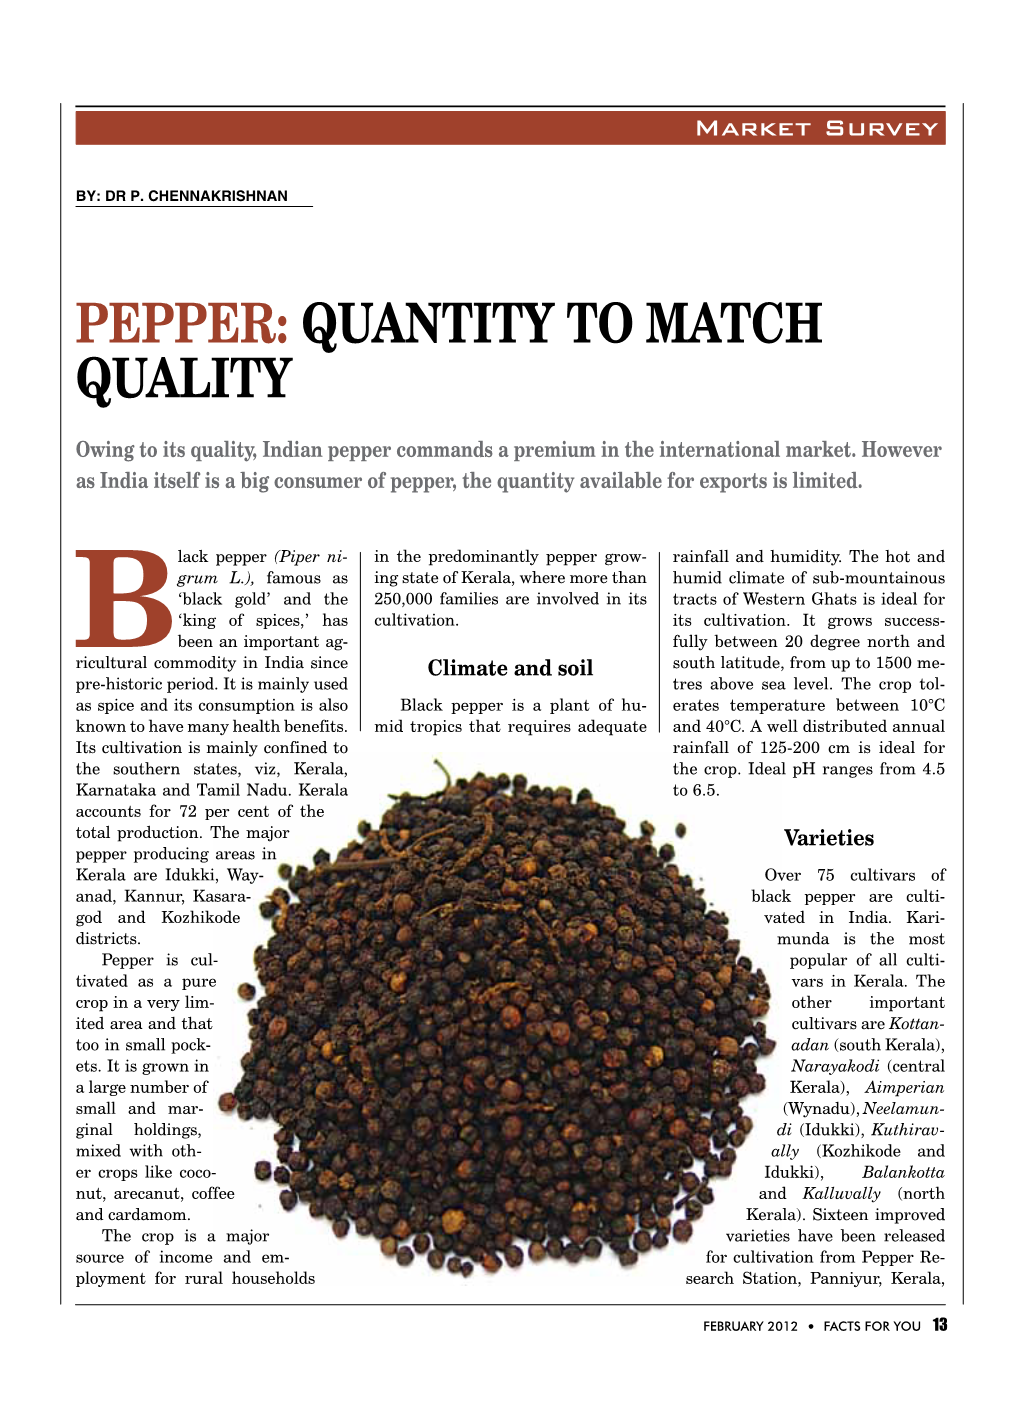 PEPPER: Quantity to Match Quality